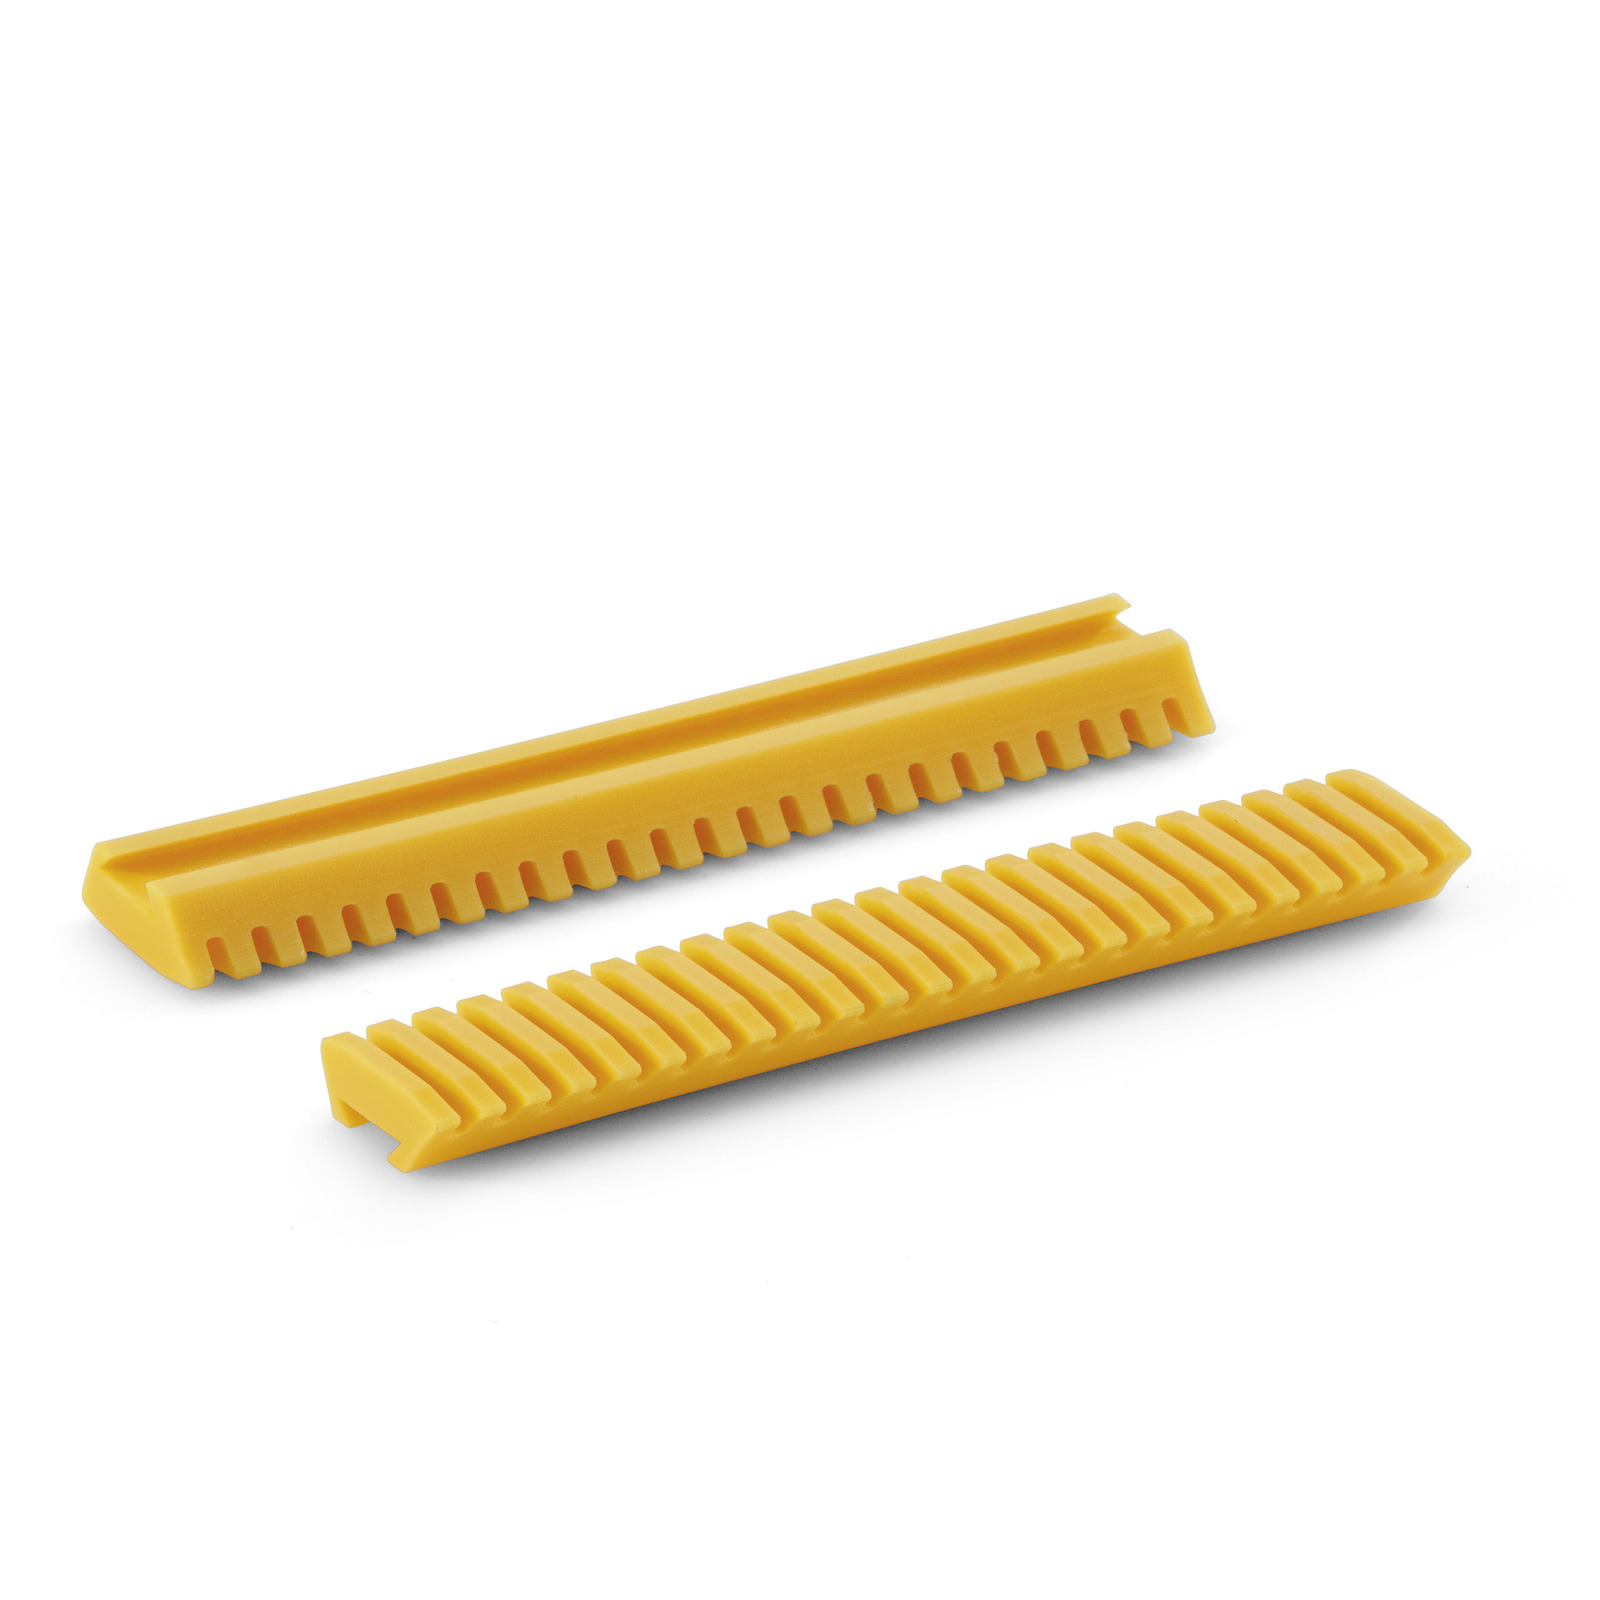 Guide comb yellow | Kärcher UK